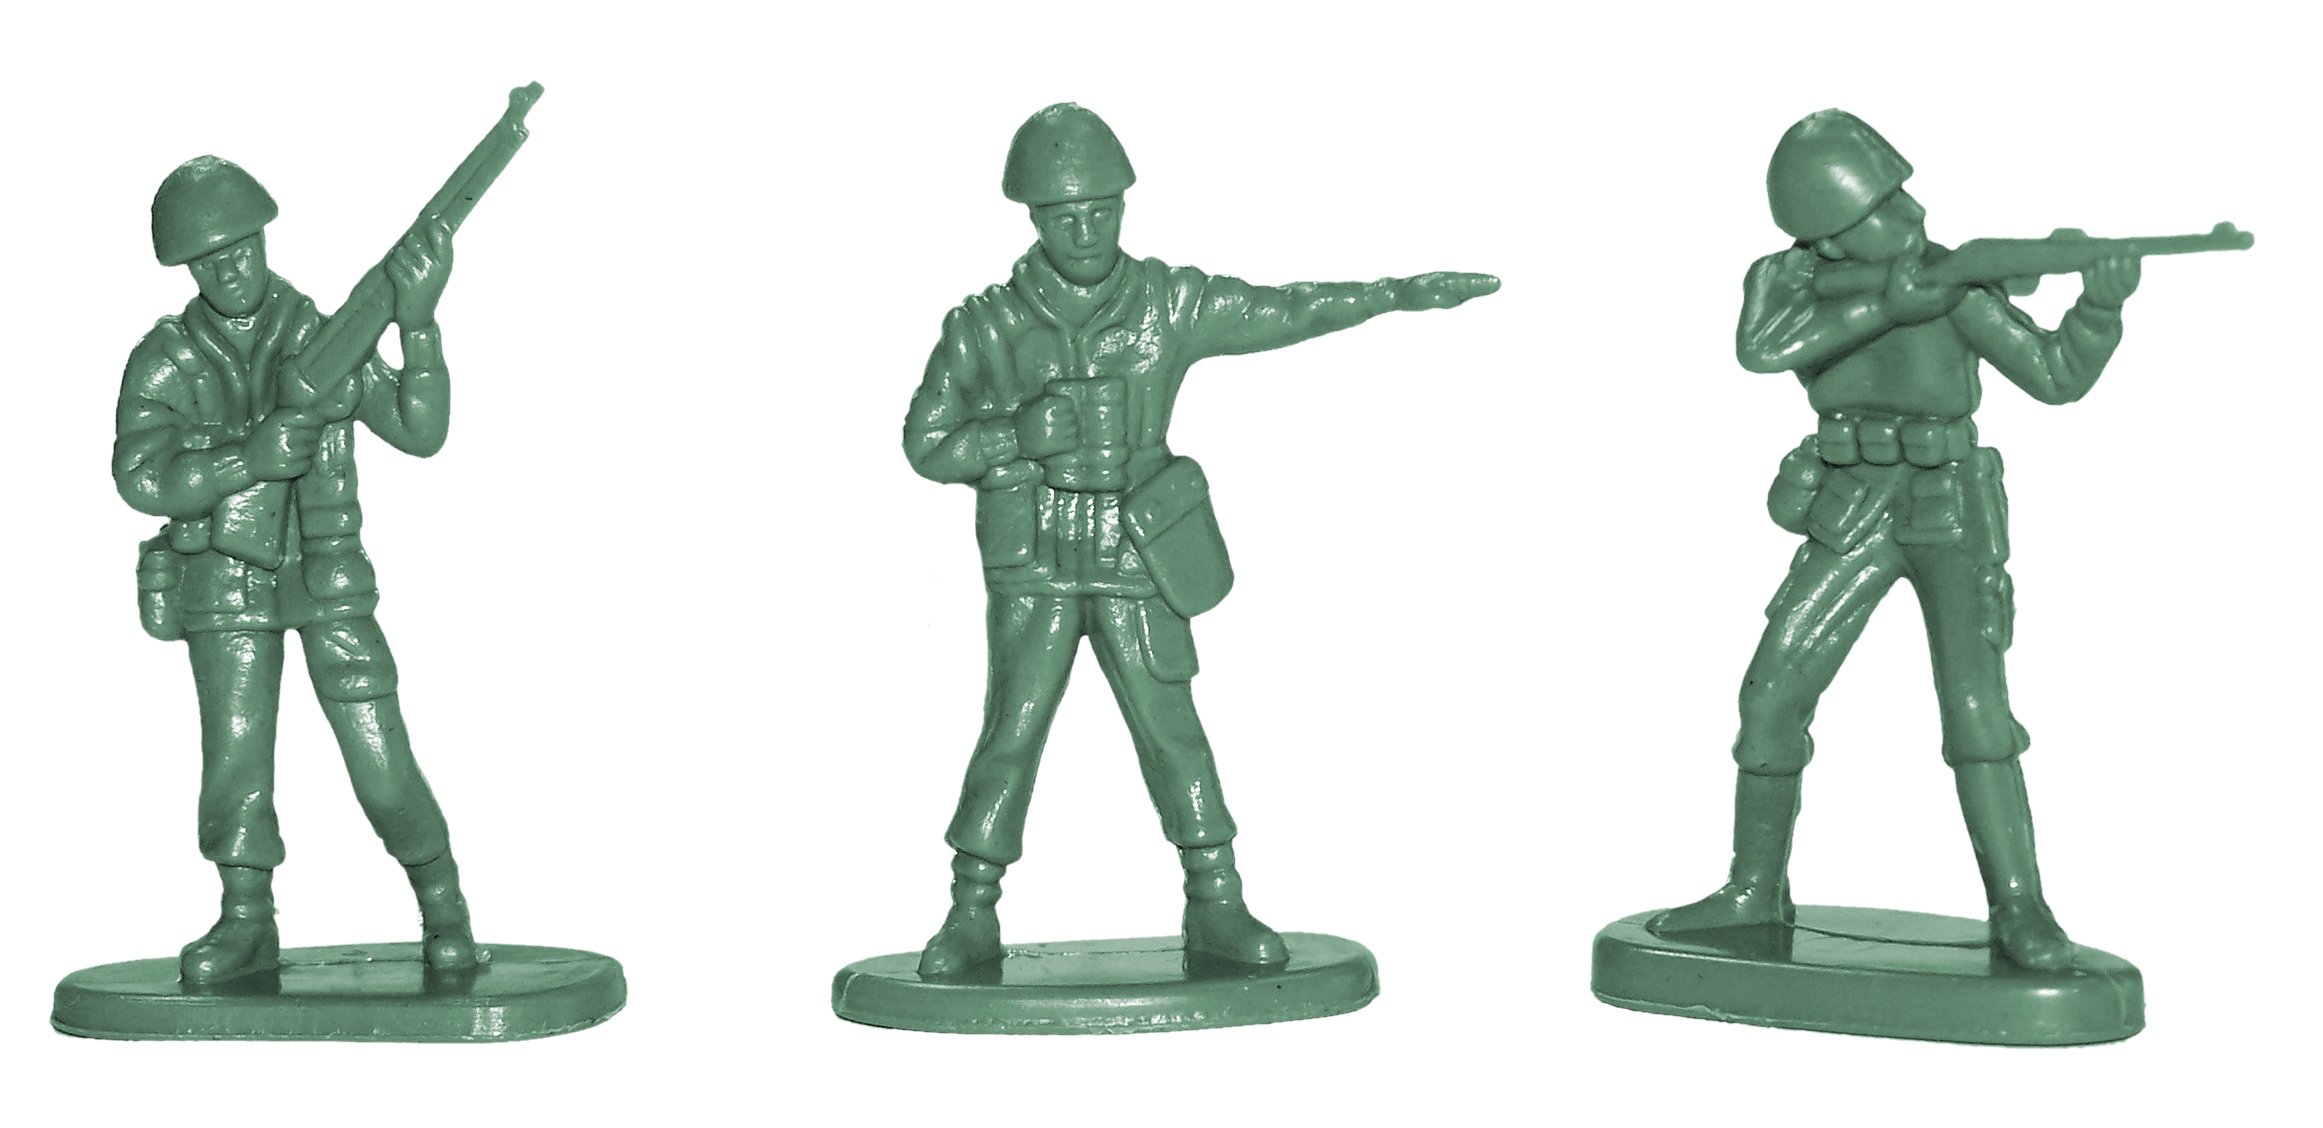 Mini Green Toy Soldiers U.S. Army Men Play War Kids Toys Boys